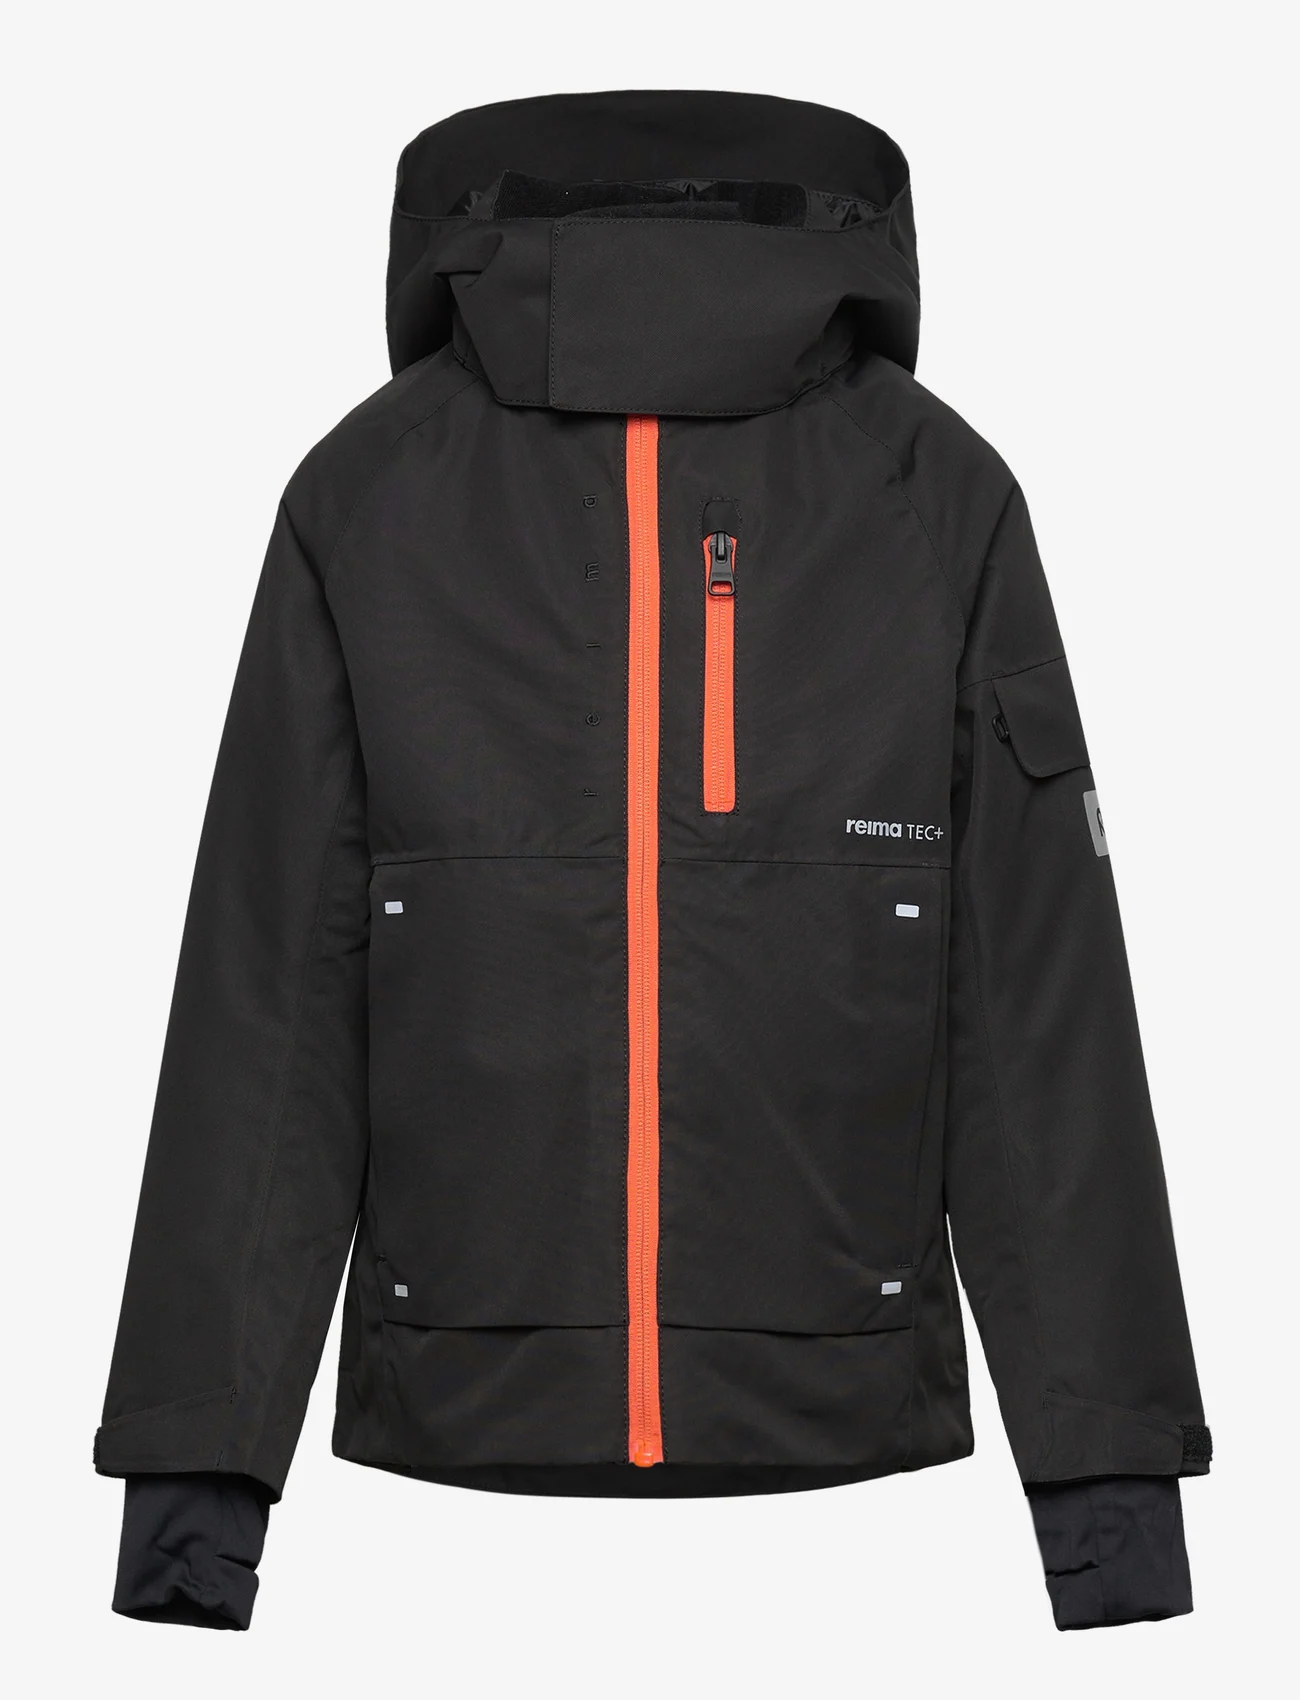 Reima - Reimatec winter jacket, Tieten - winter jackets - black - 0